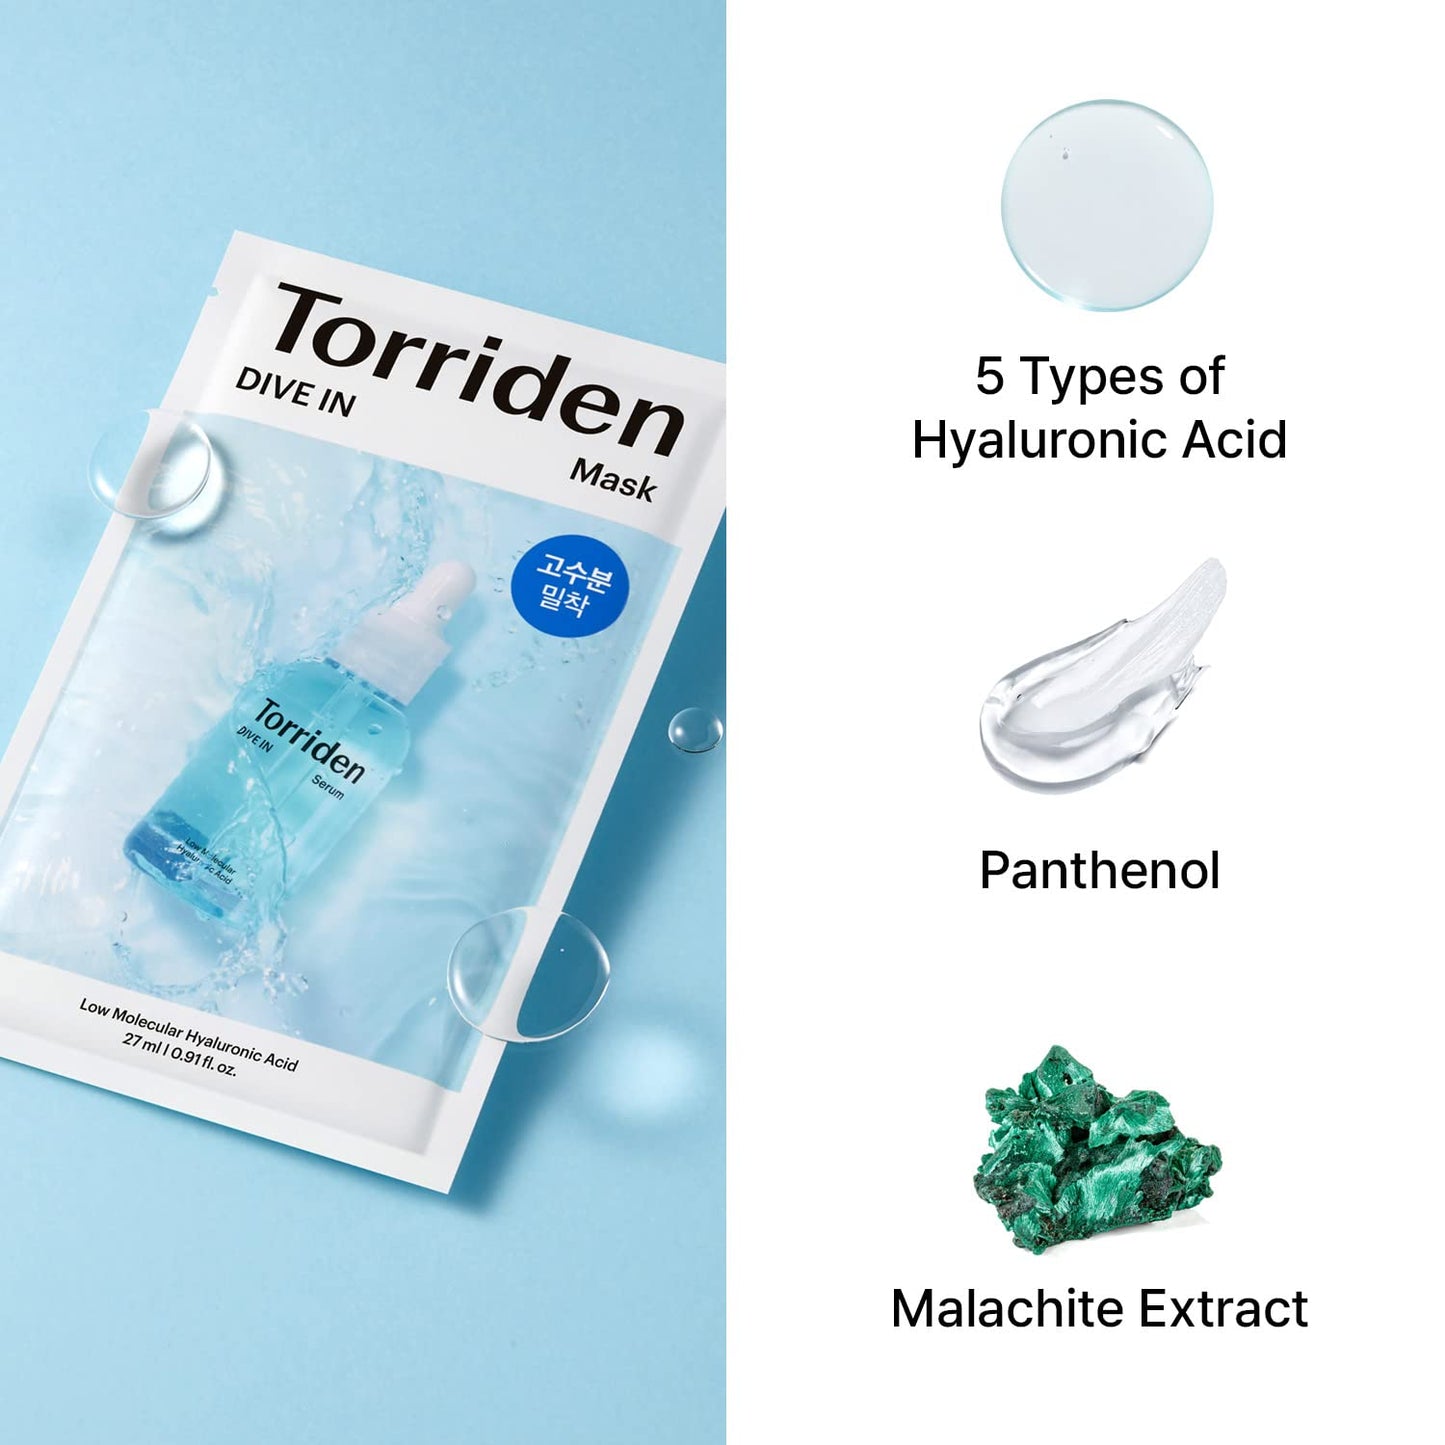 Dive in low molecular hyaluronic acid serum mask by Torriden